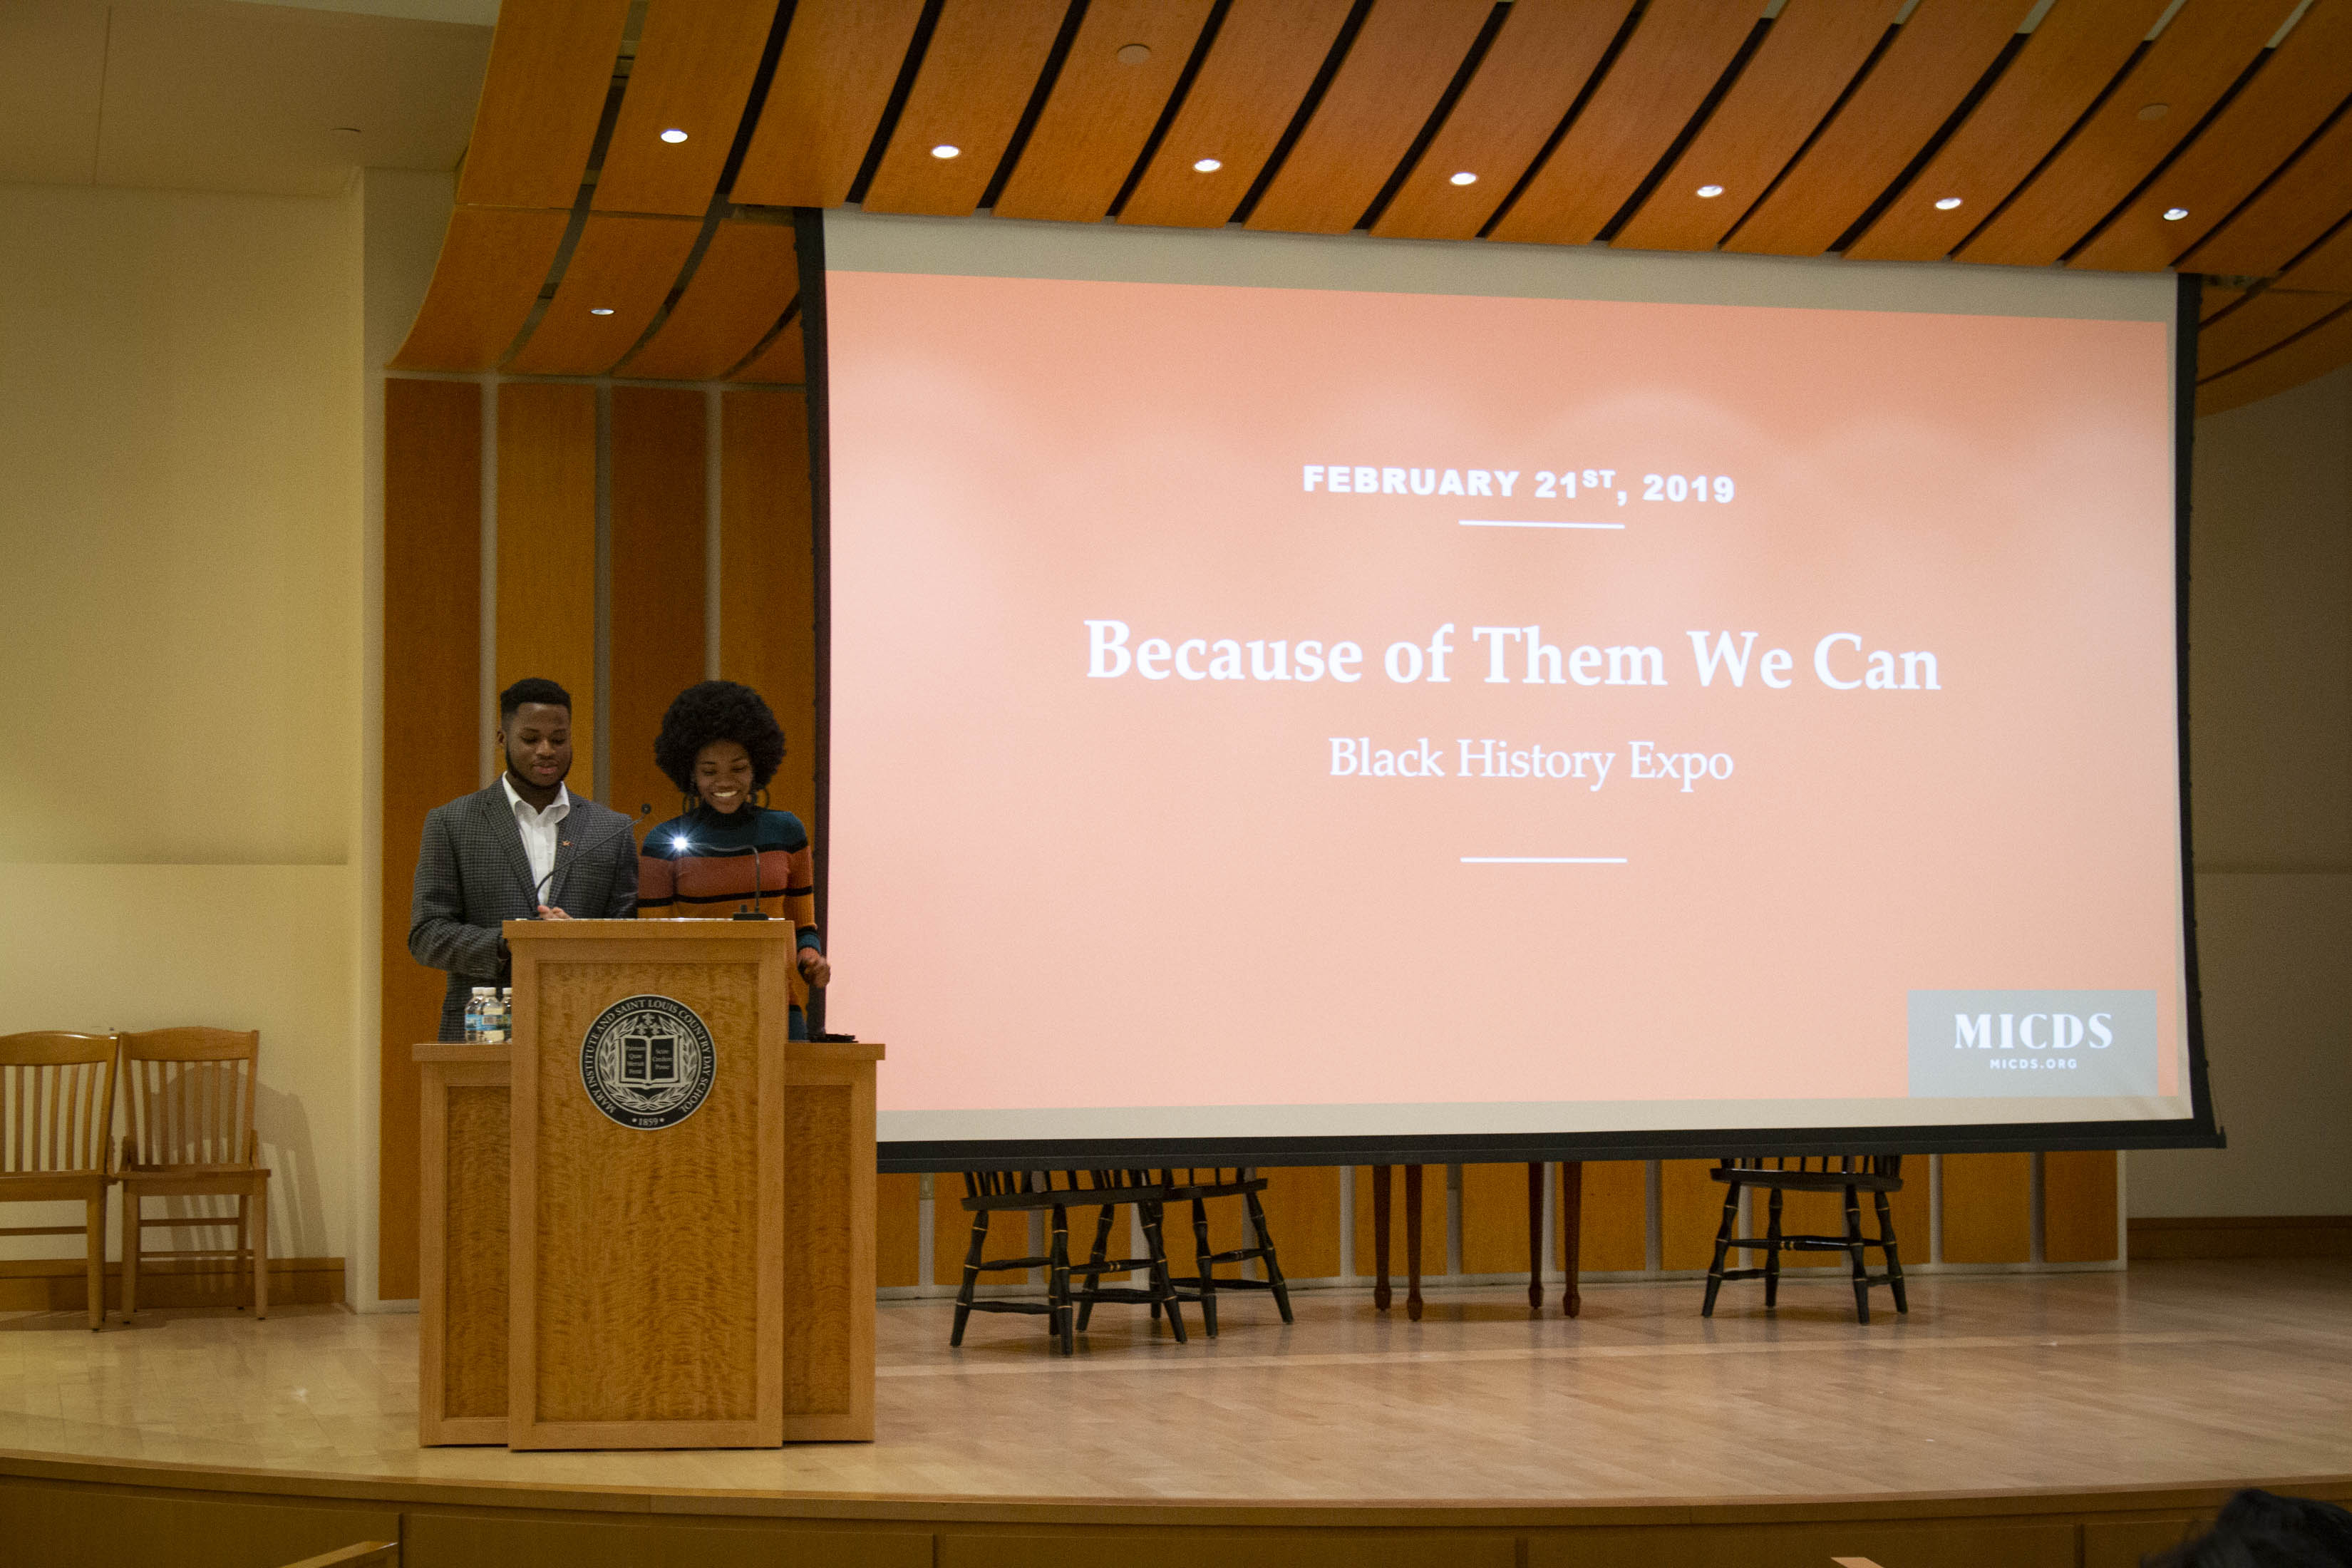 MICDS Black Student Union hosts celebration of Black History Month